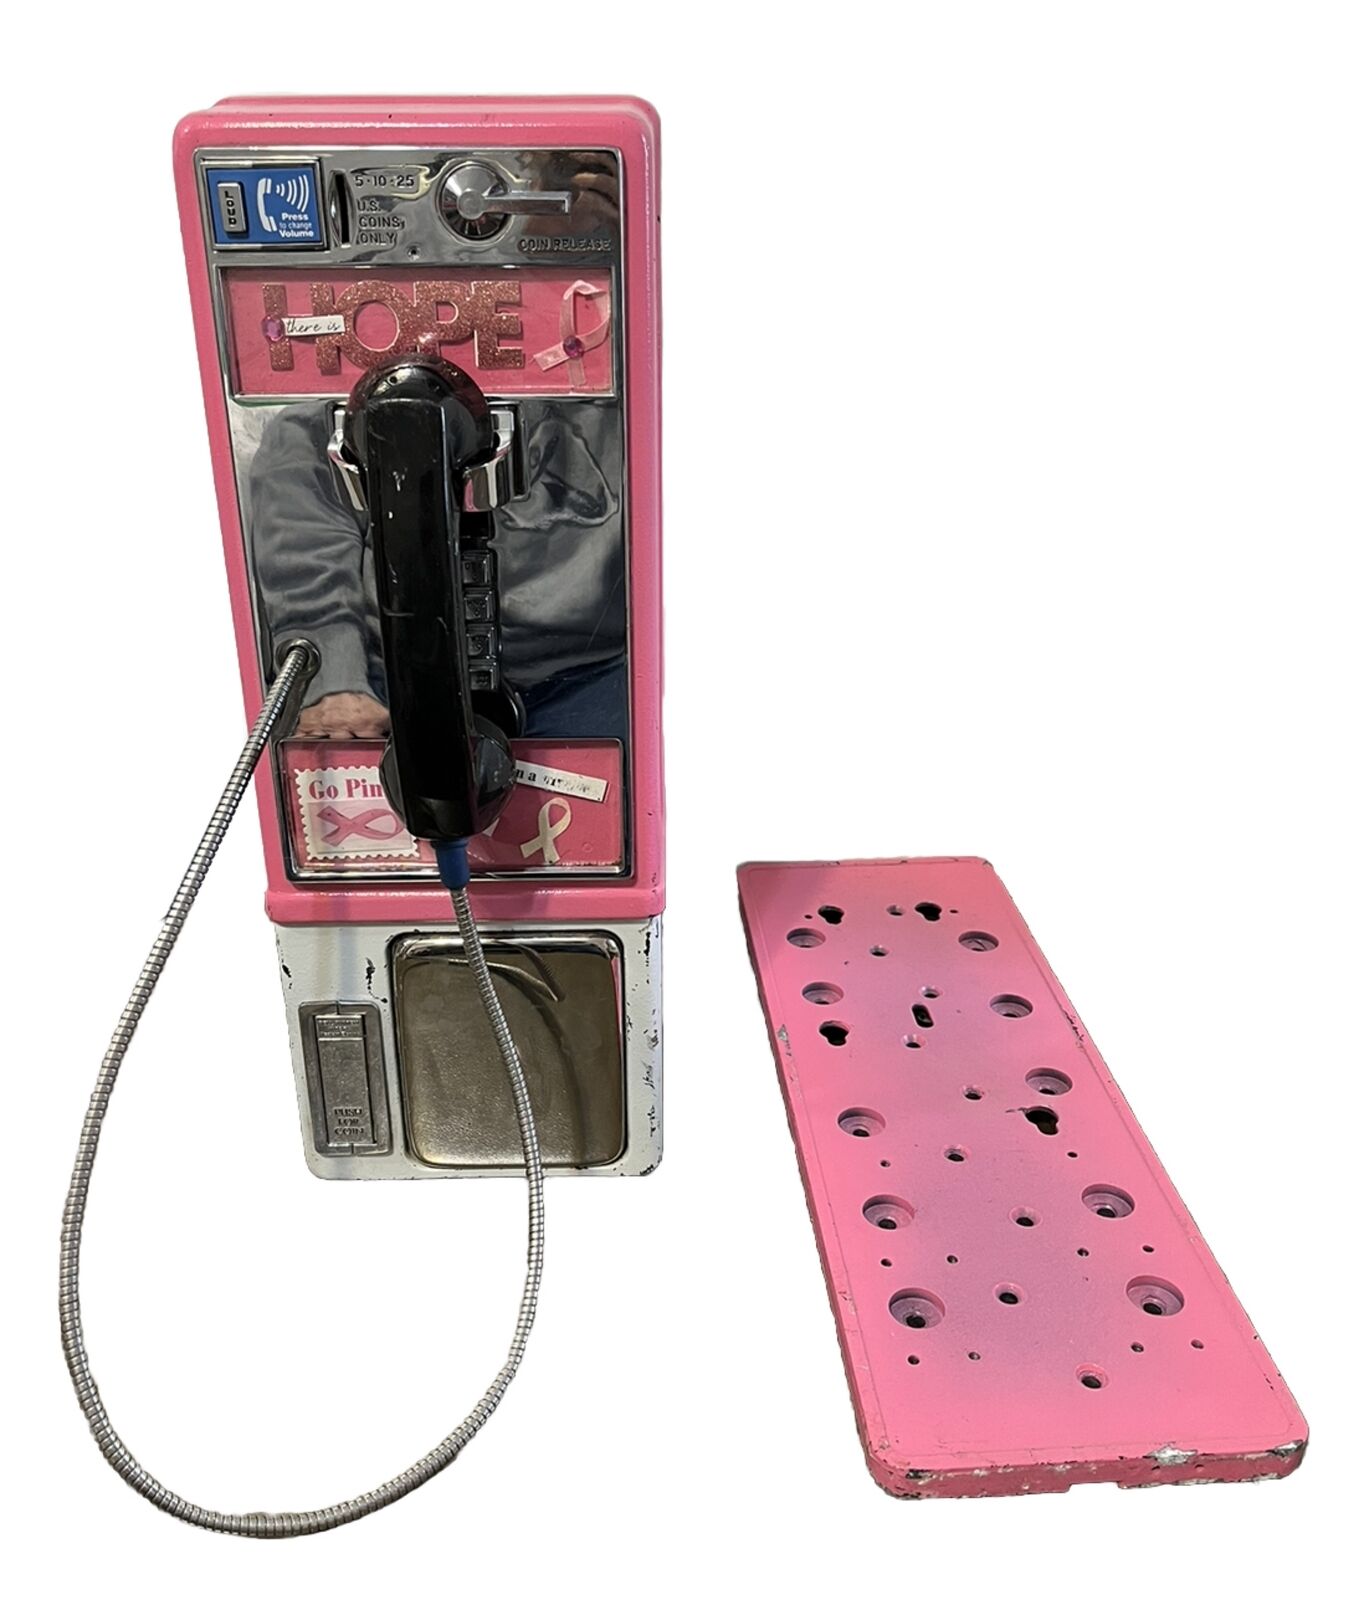 VTG Payphone & Aluminum Mounting Plate Both Pink Western Electric No Key REPAIR